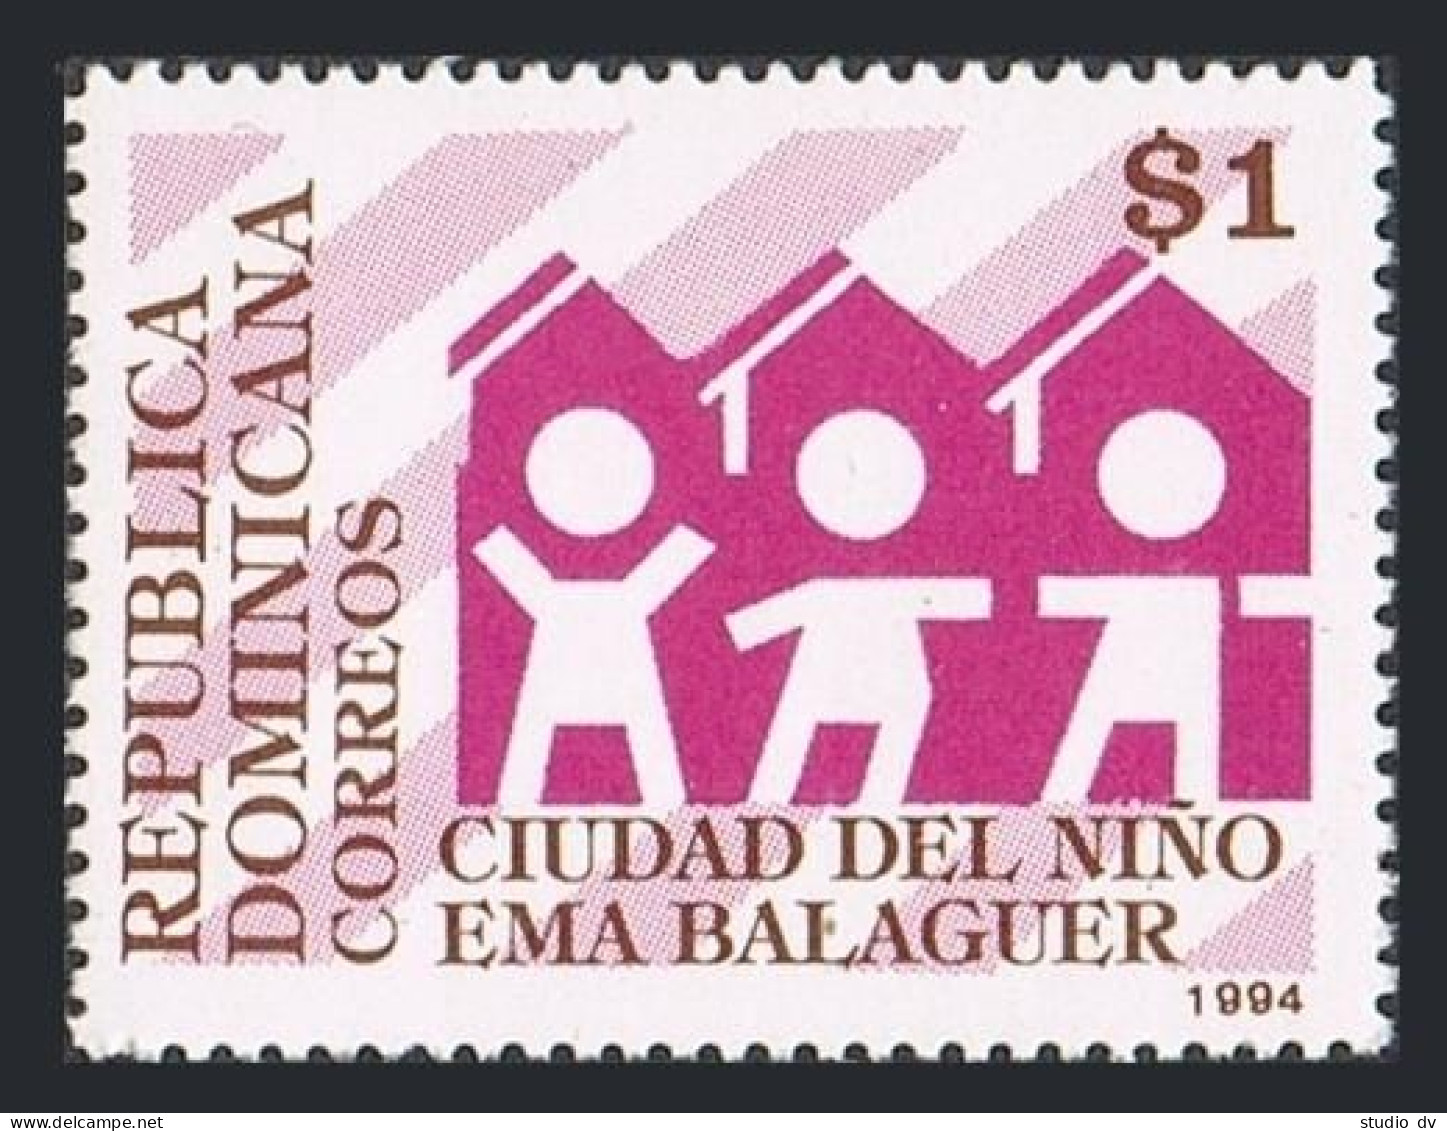 Dominican Rep 1165,MNH.Michel 1708. Ema Balaguer City Of Children,1994. - Dominikanische Rep.